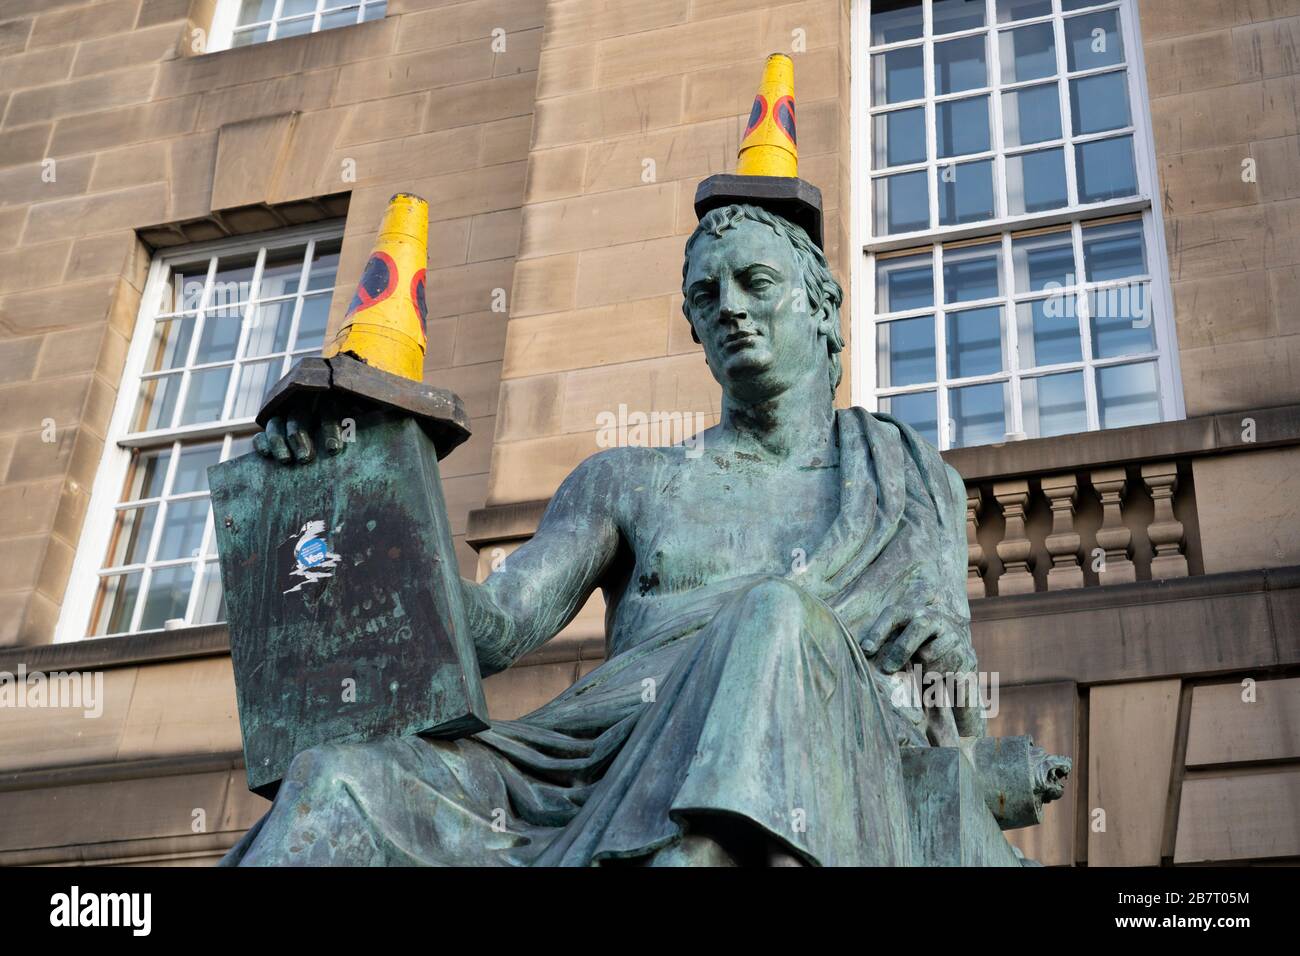 Edinburgh, Scotland, UK. 18 March 2020.Traffic cones placed on statue of David Hume on the Royal Mile in Edinburgh. Iain Masterton/Alamy Live News. Stock Photo